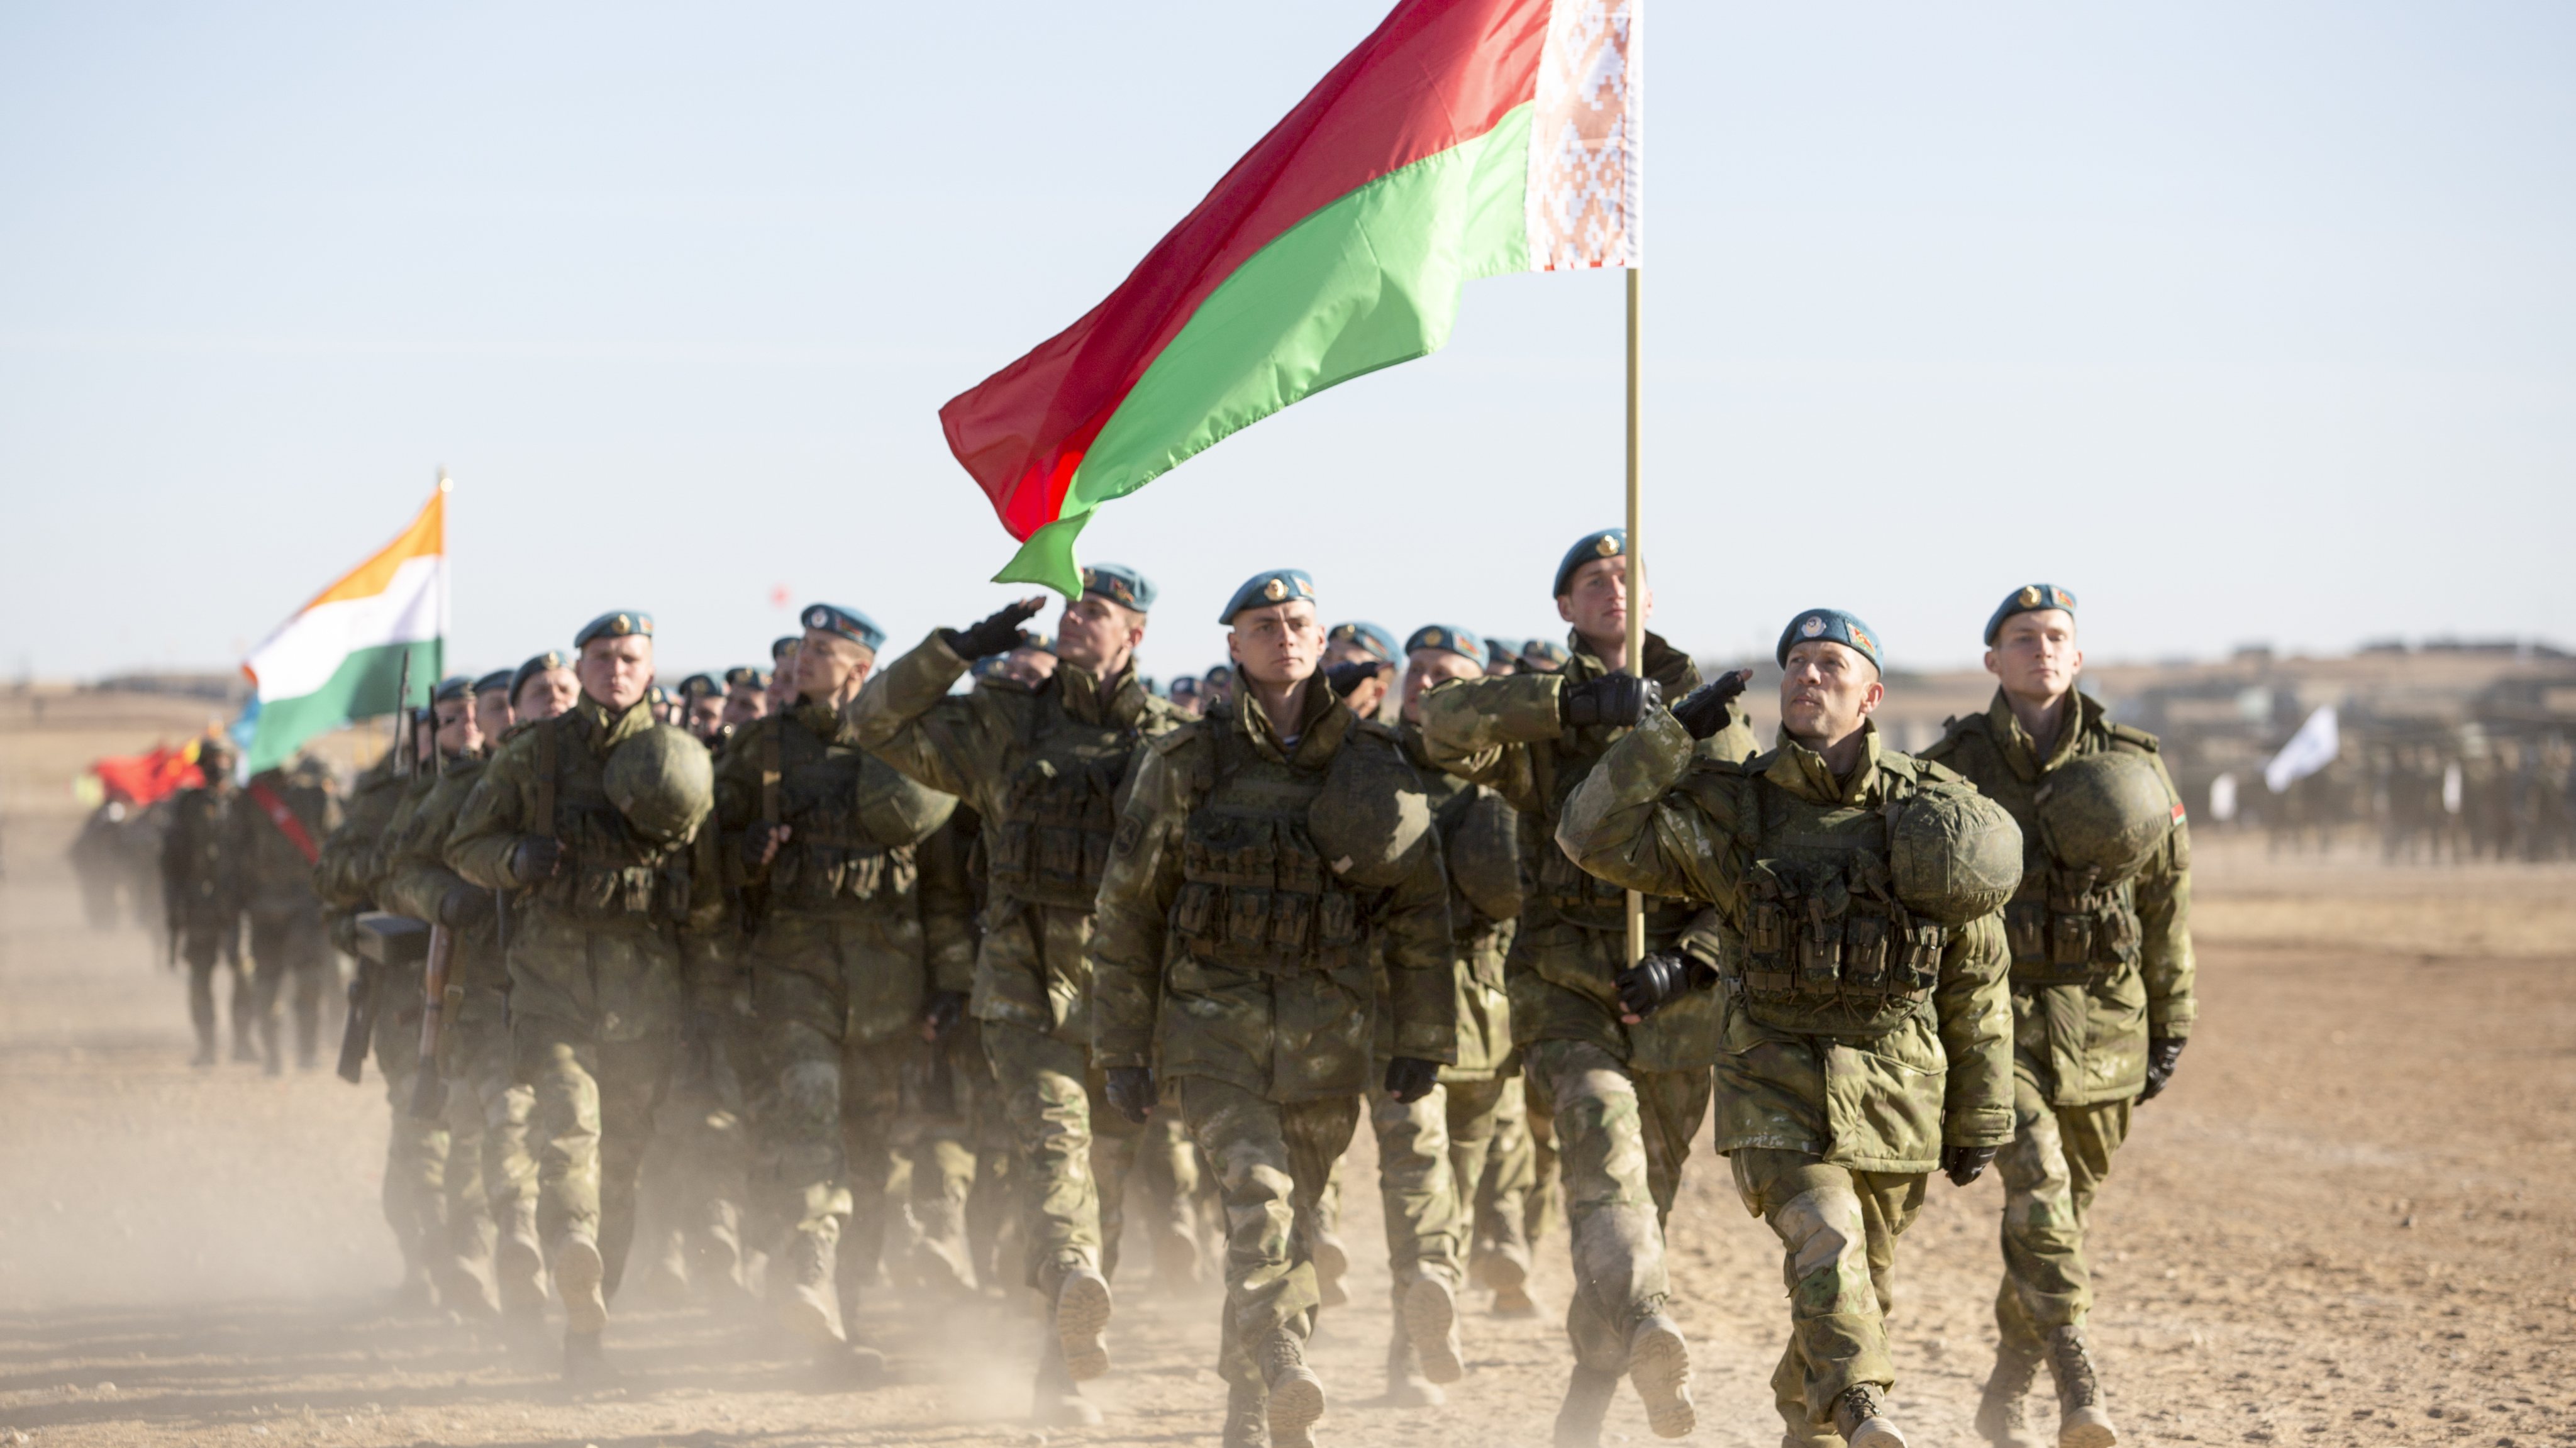 SCO member states hold counter-terrorism exercise in Orenburg Region, Russia